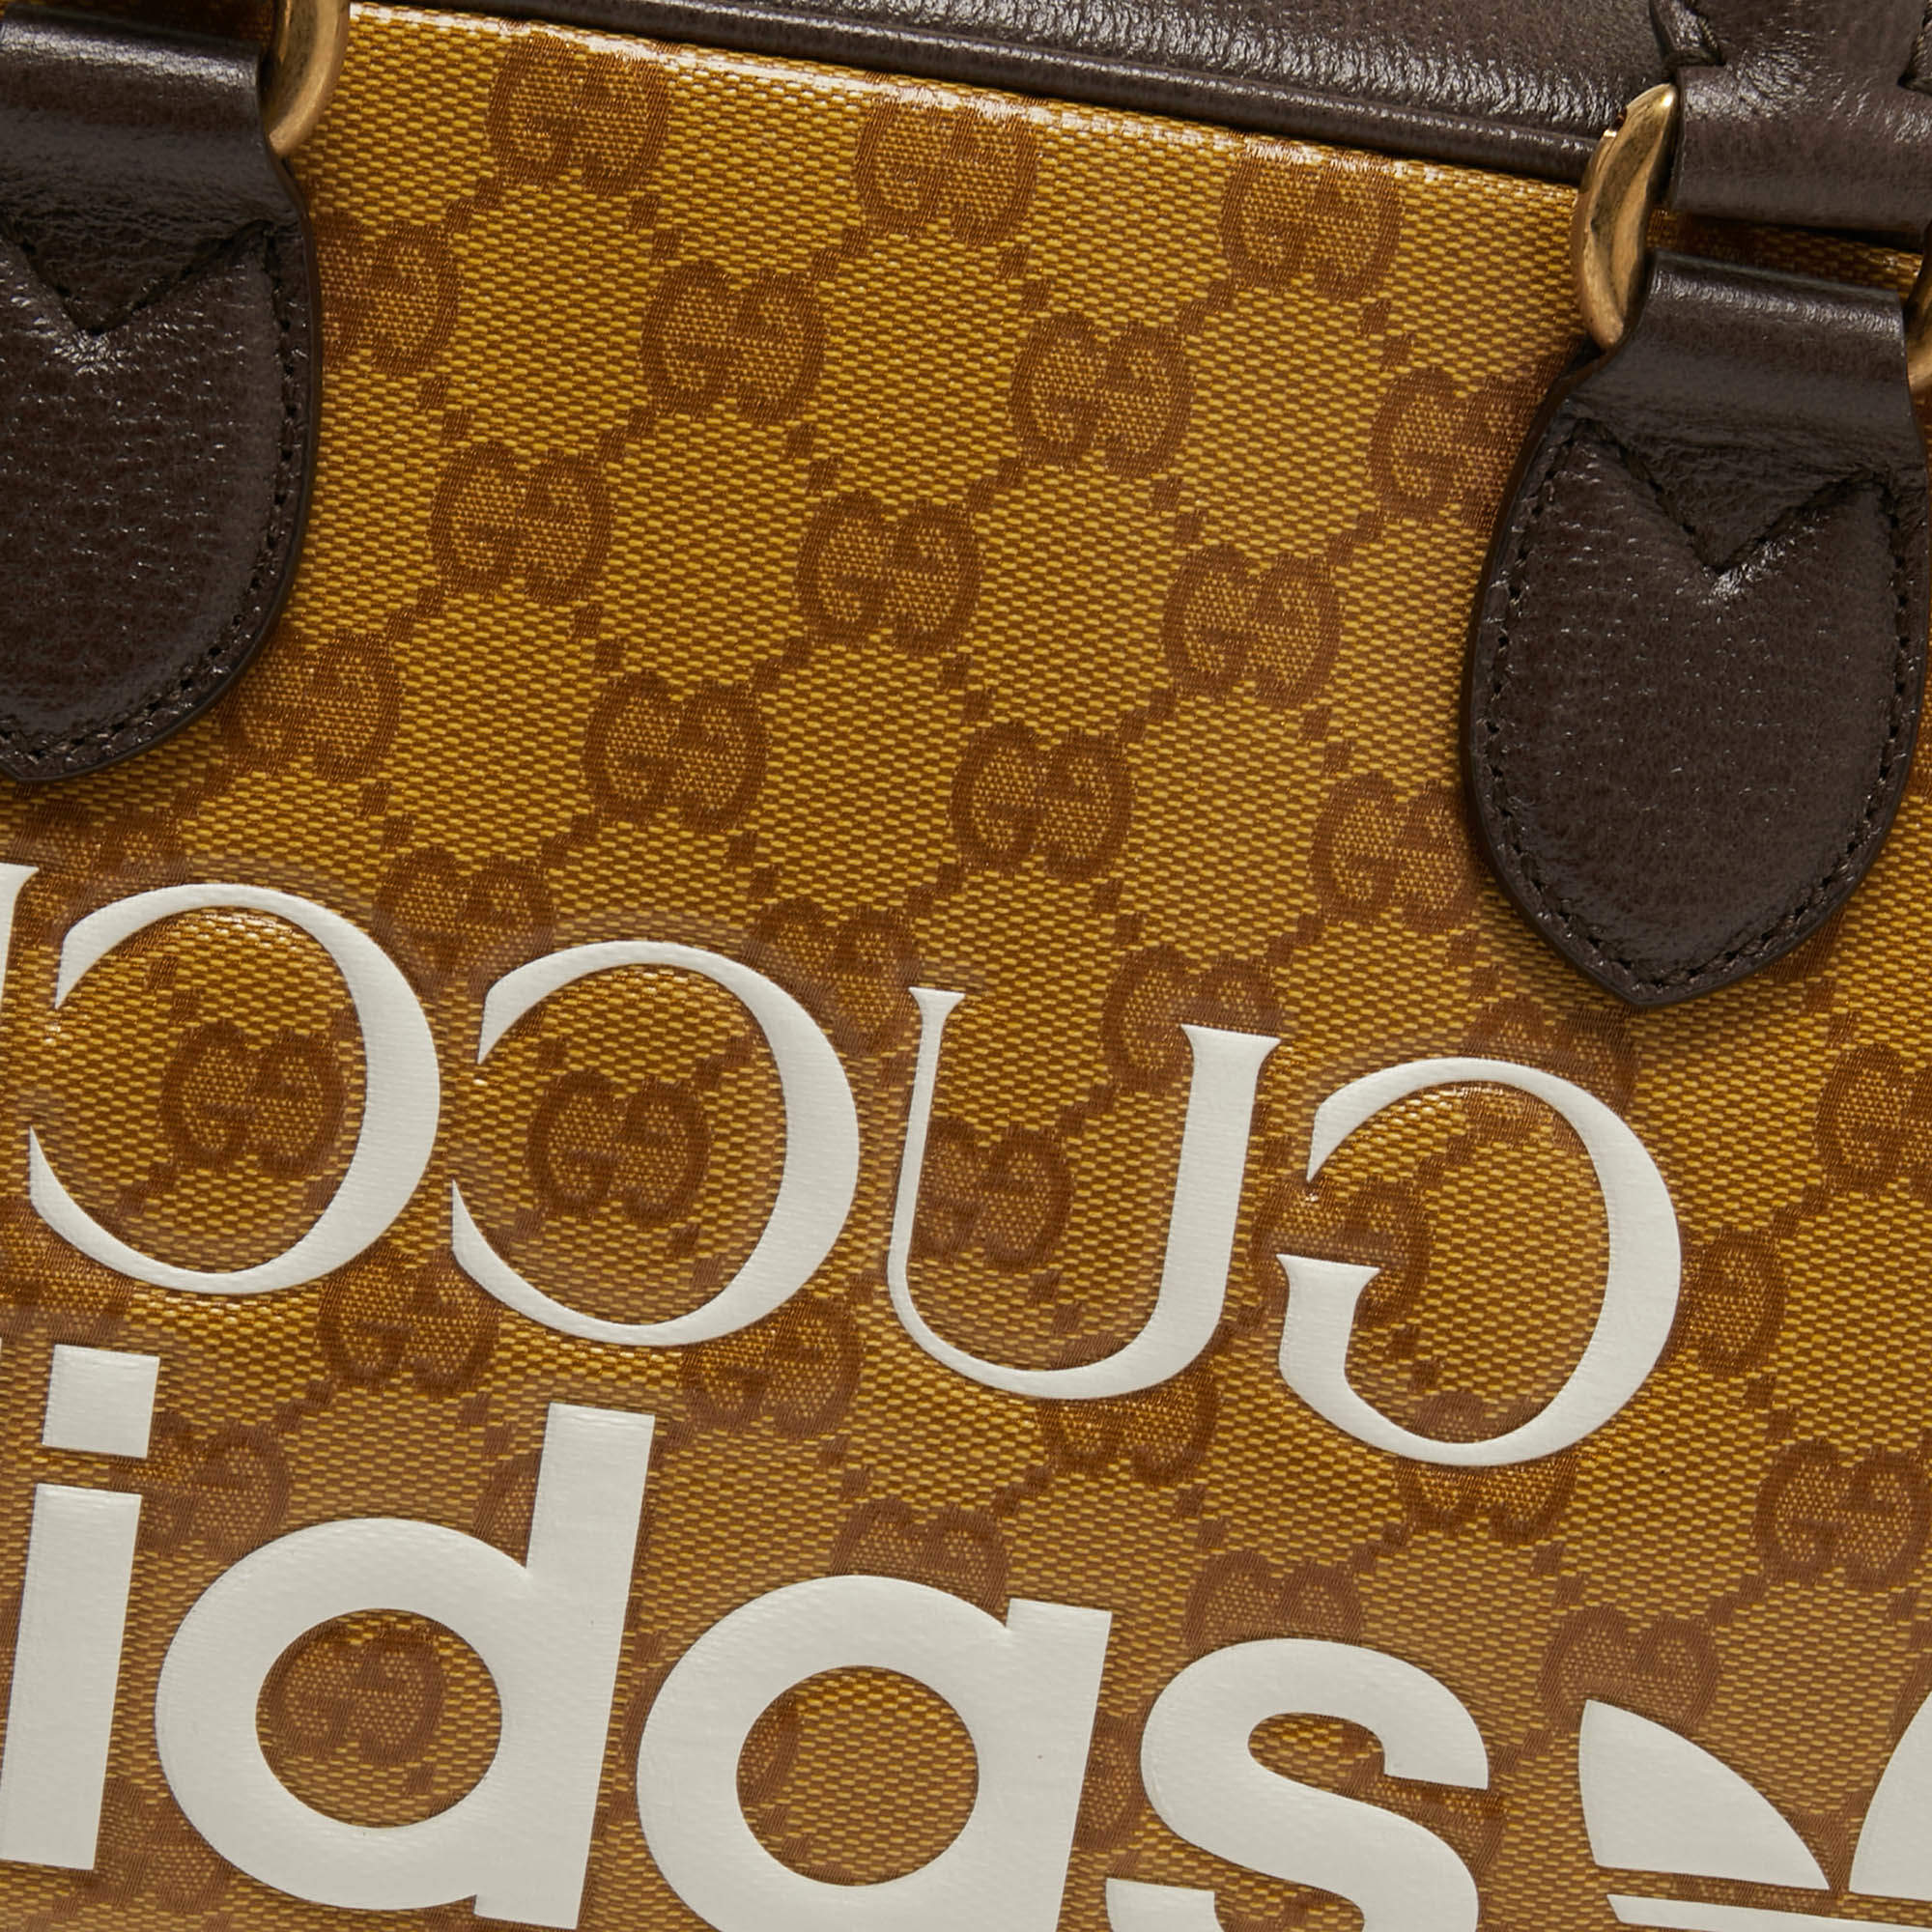 Gucci x adidas Large Duffle Bag Beige/Brown